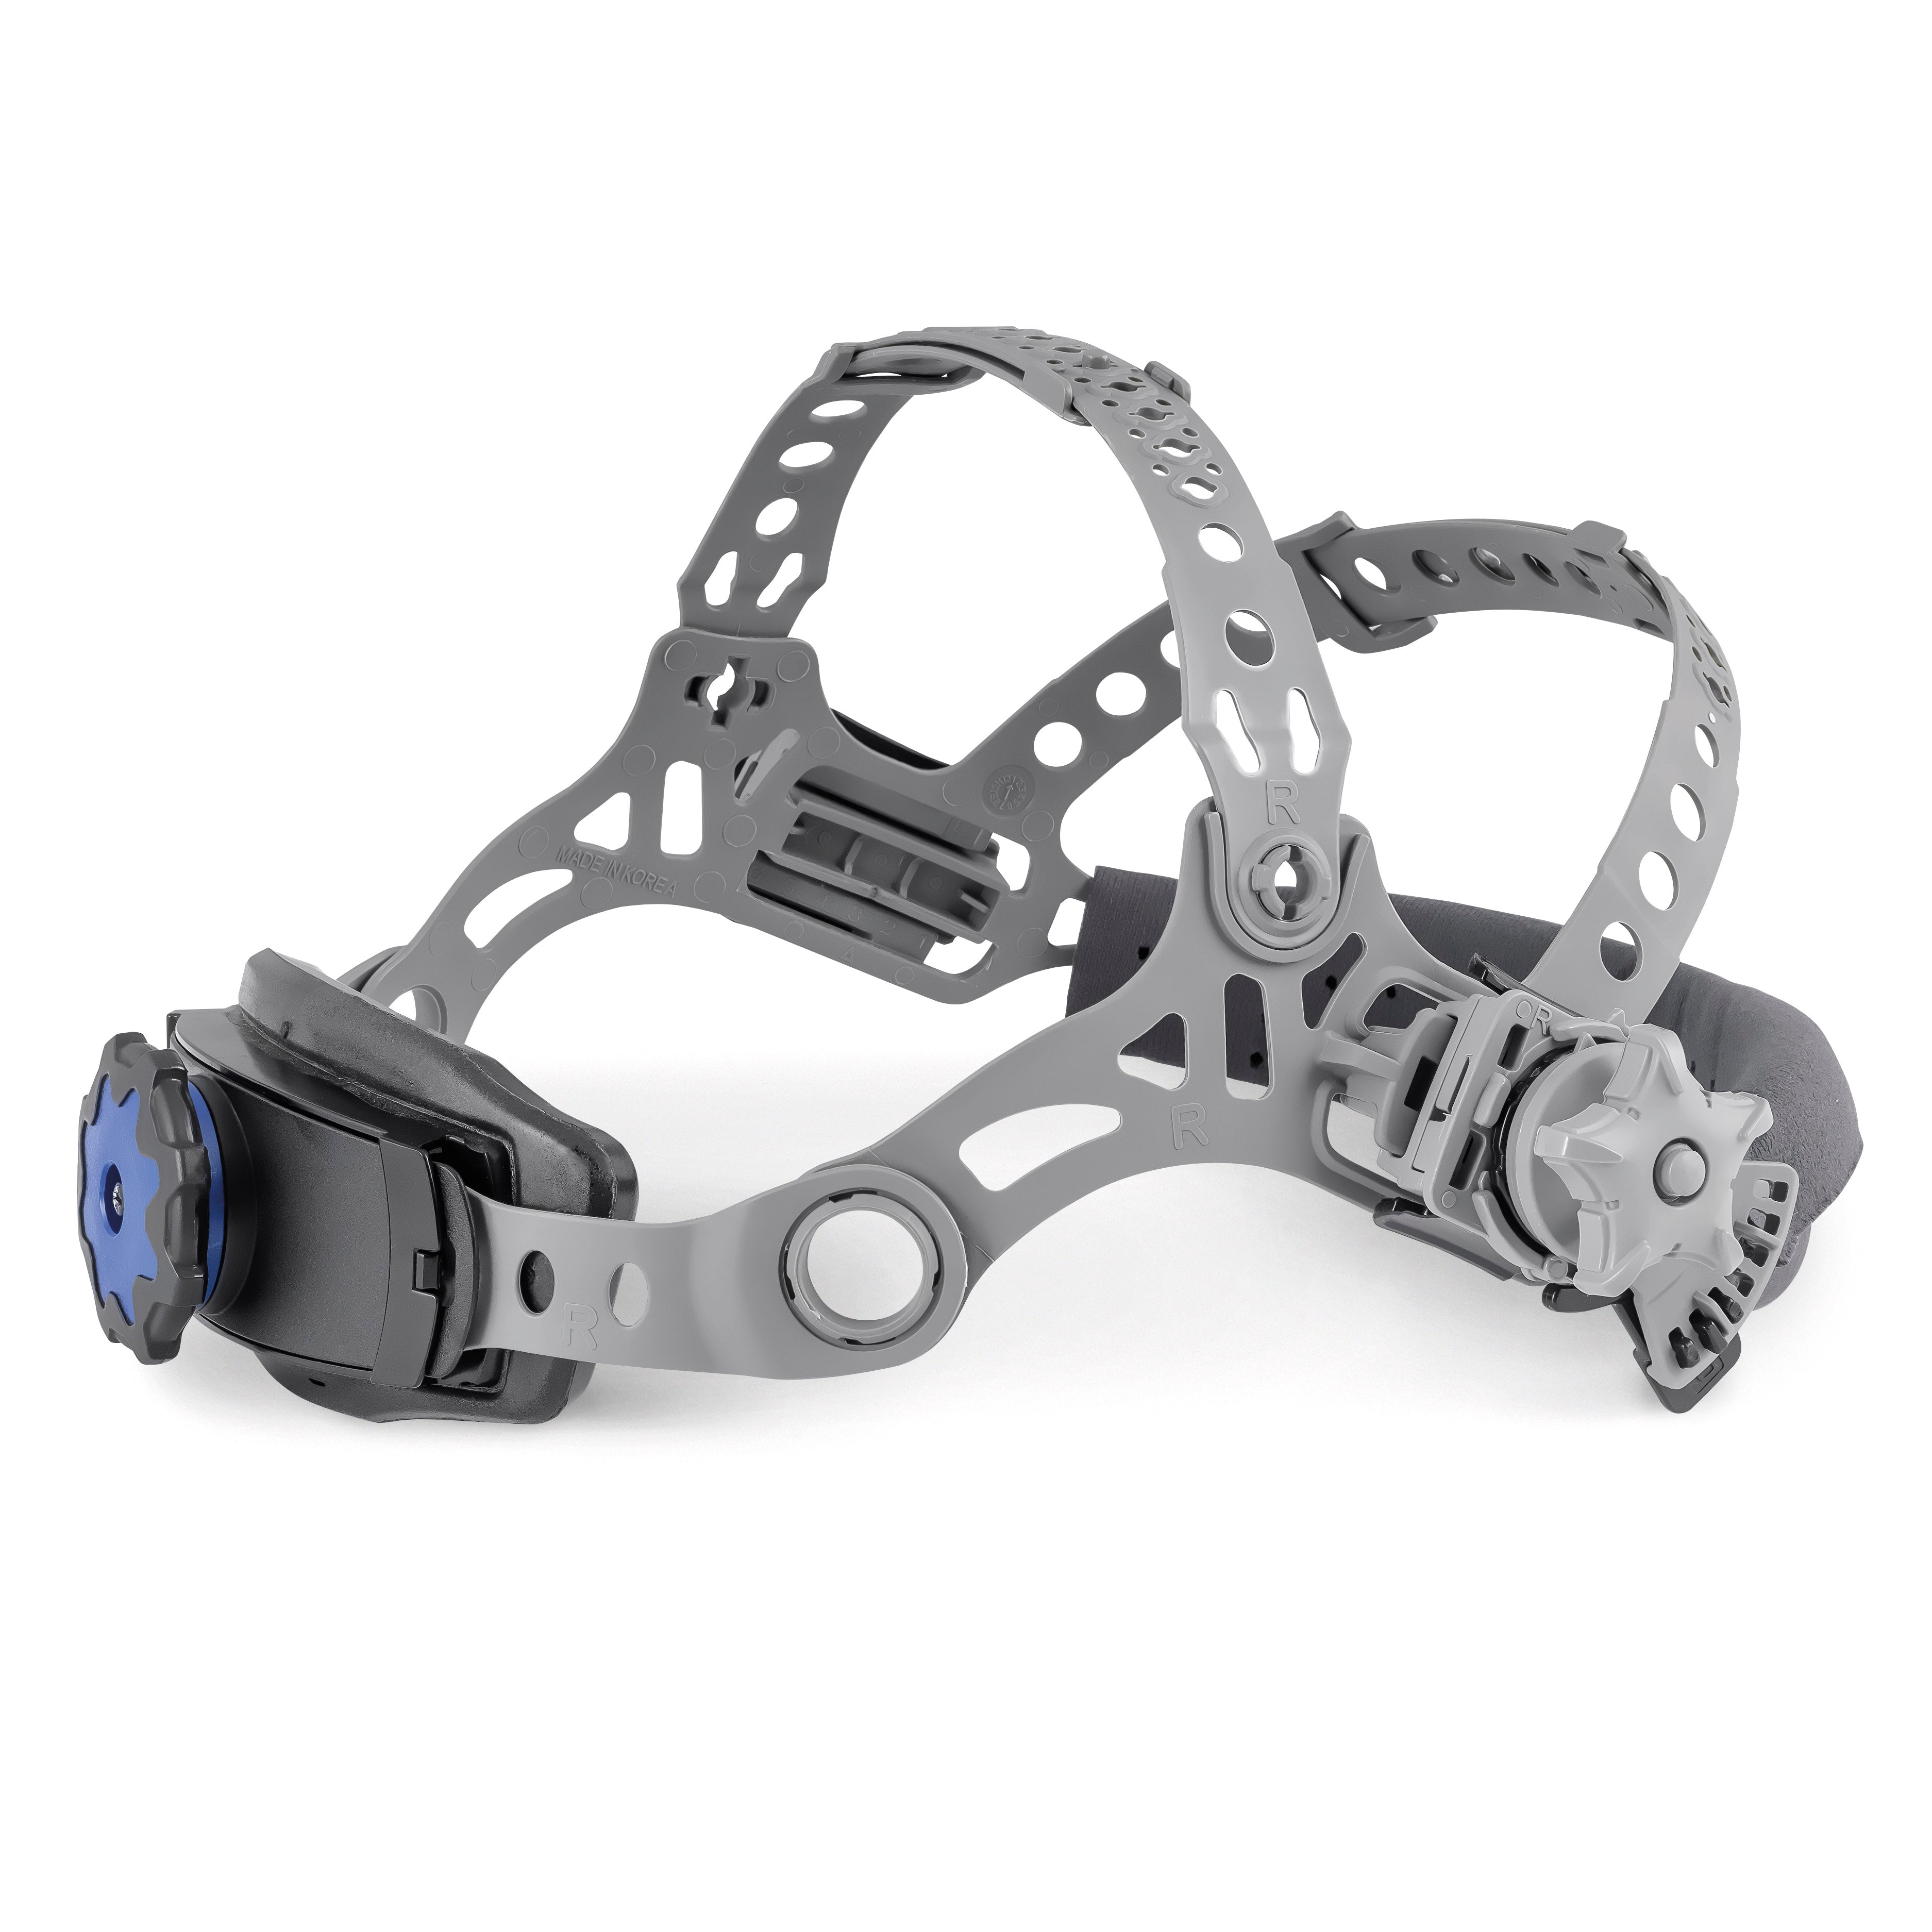 Miller Digital Infinity Black Ops Welding Helmet w/ClearLight 2.0 Lens (289715)